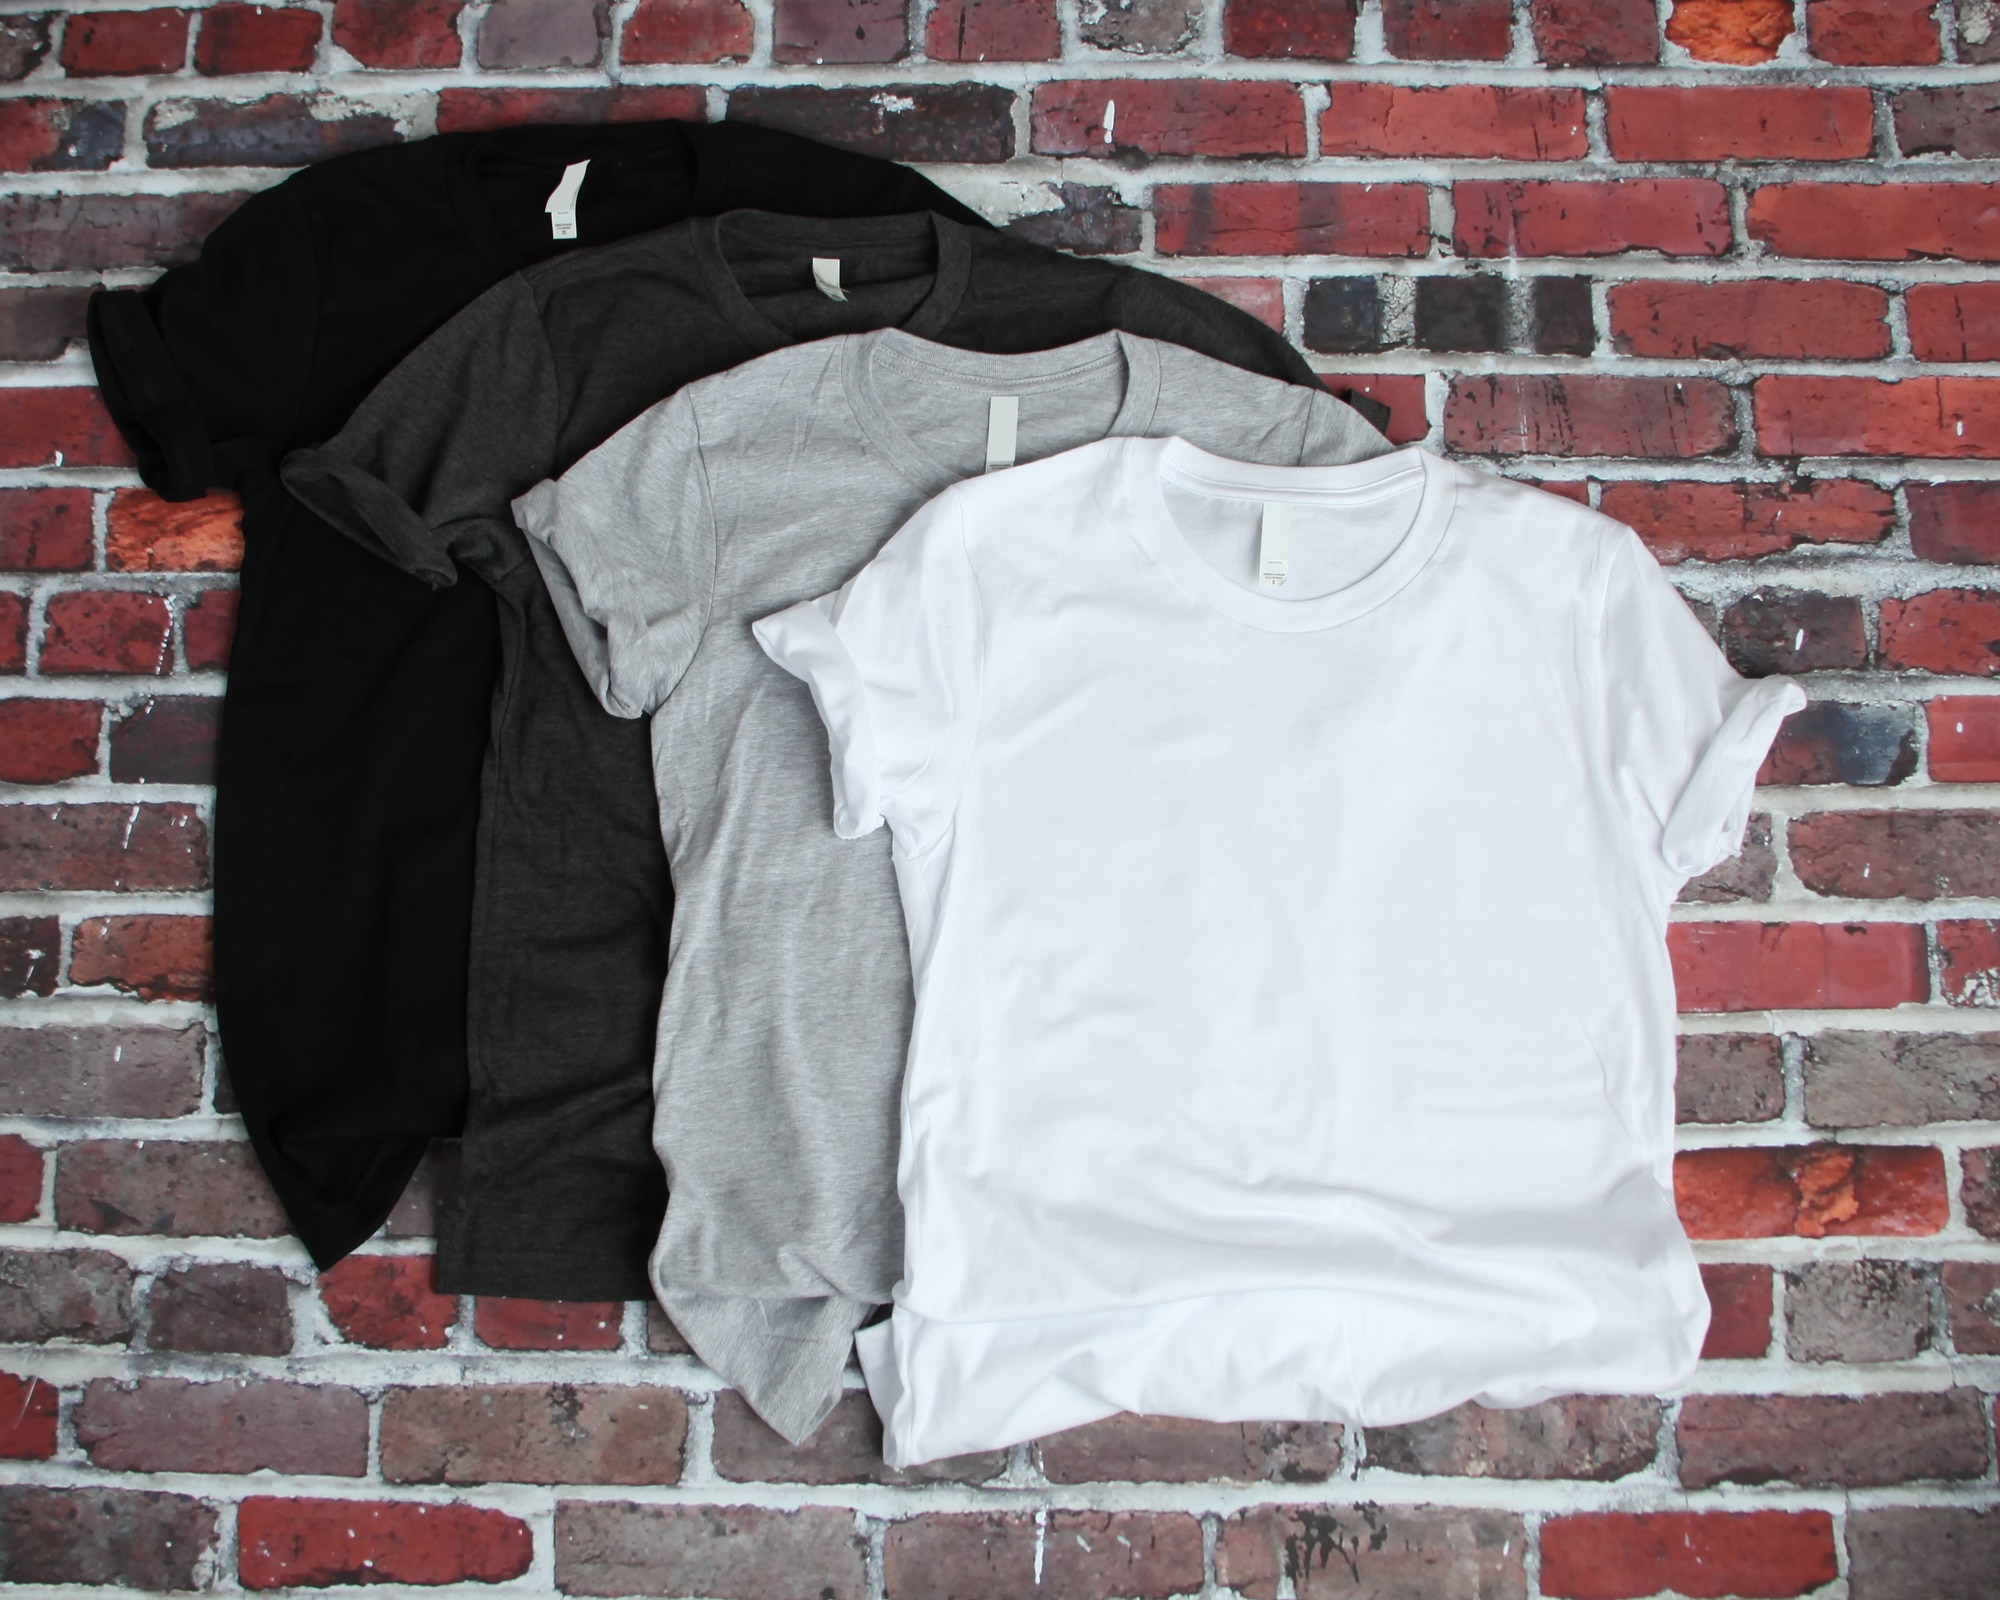 Flat lay mockup of gray, white and black tee shirts on brick background